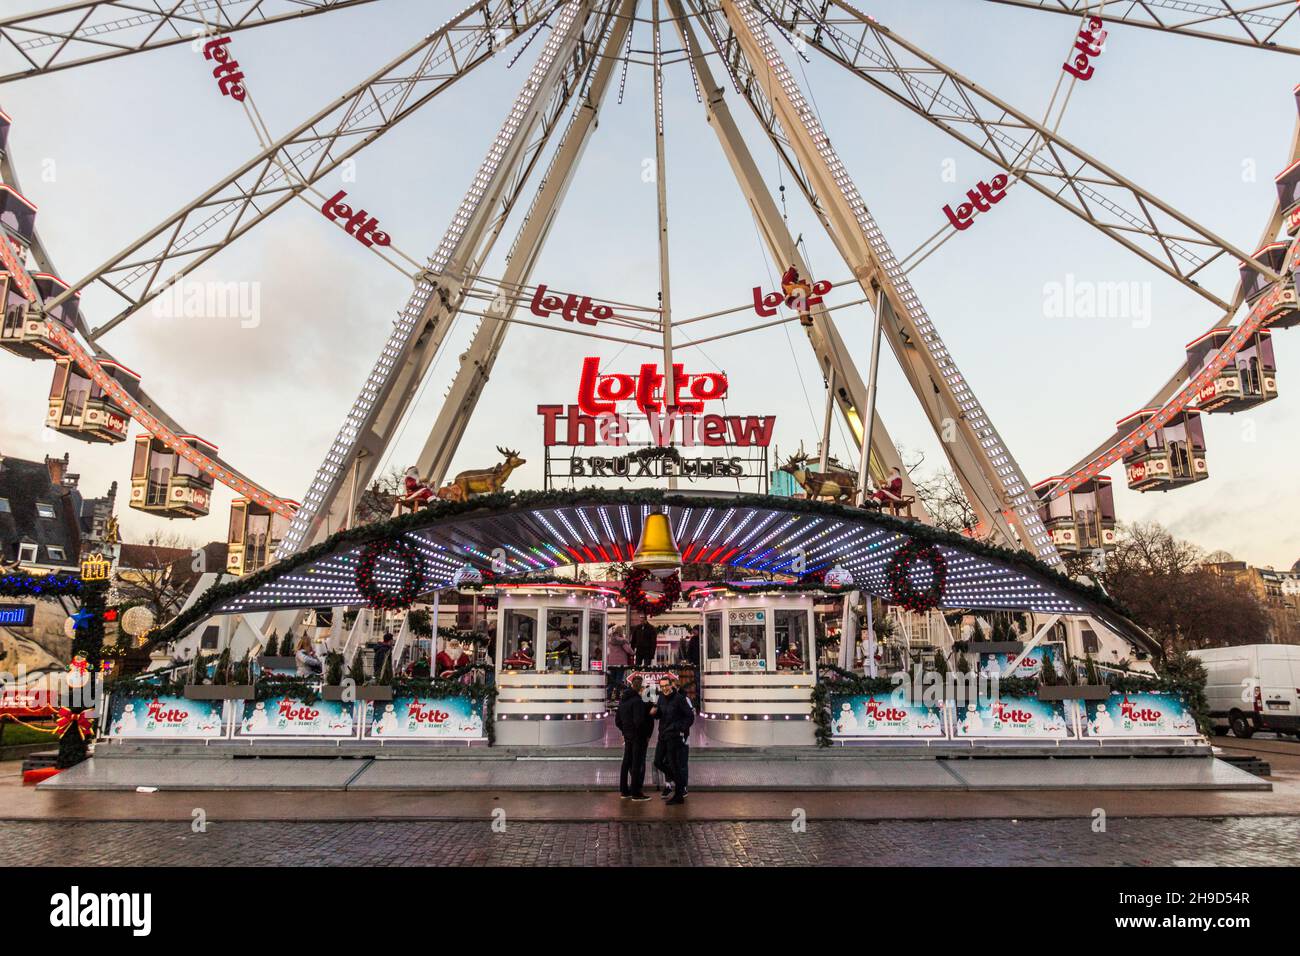 BRUSELAS, BÉLGICA - 17 DE DICIEMBRE de 2018: Ruedas de Ferris en la plaza de Santa Catalina en Bruselas, capital de Bélgica Foto de stock